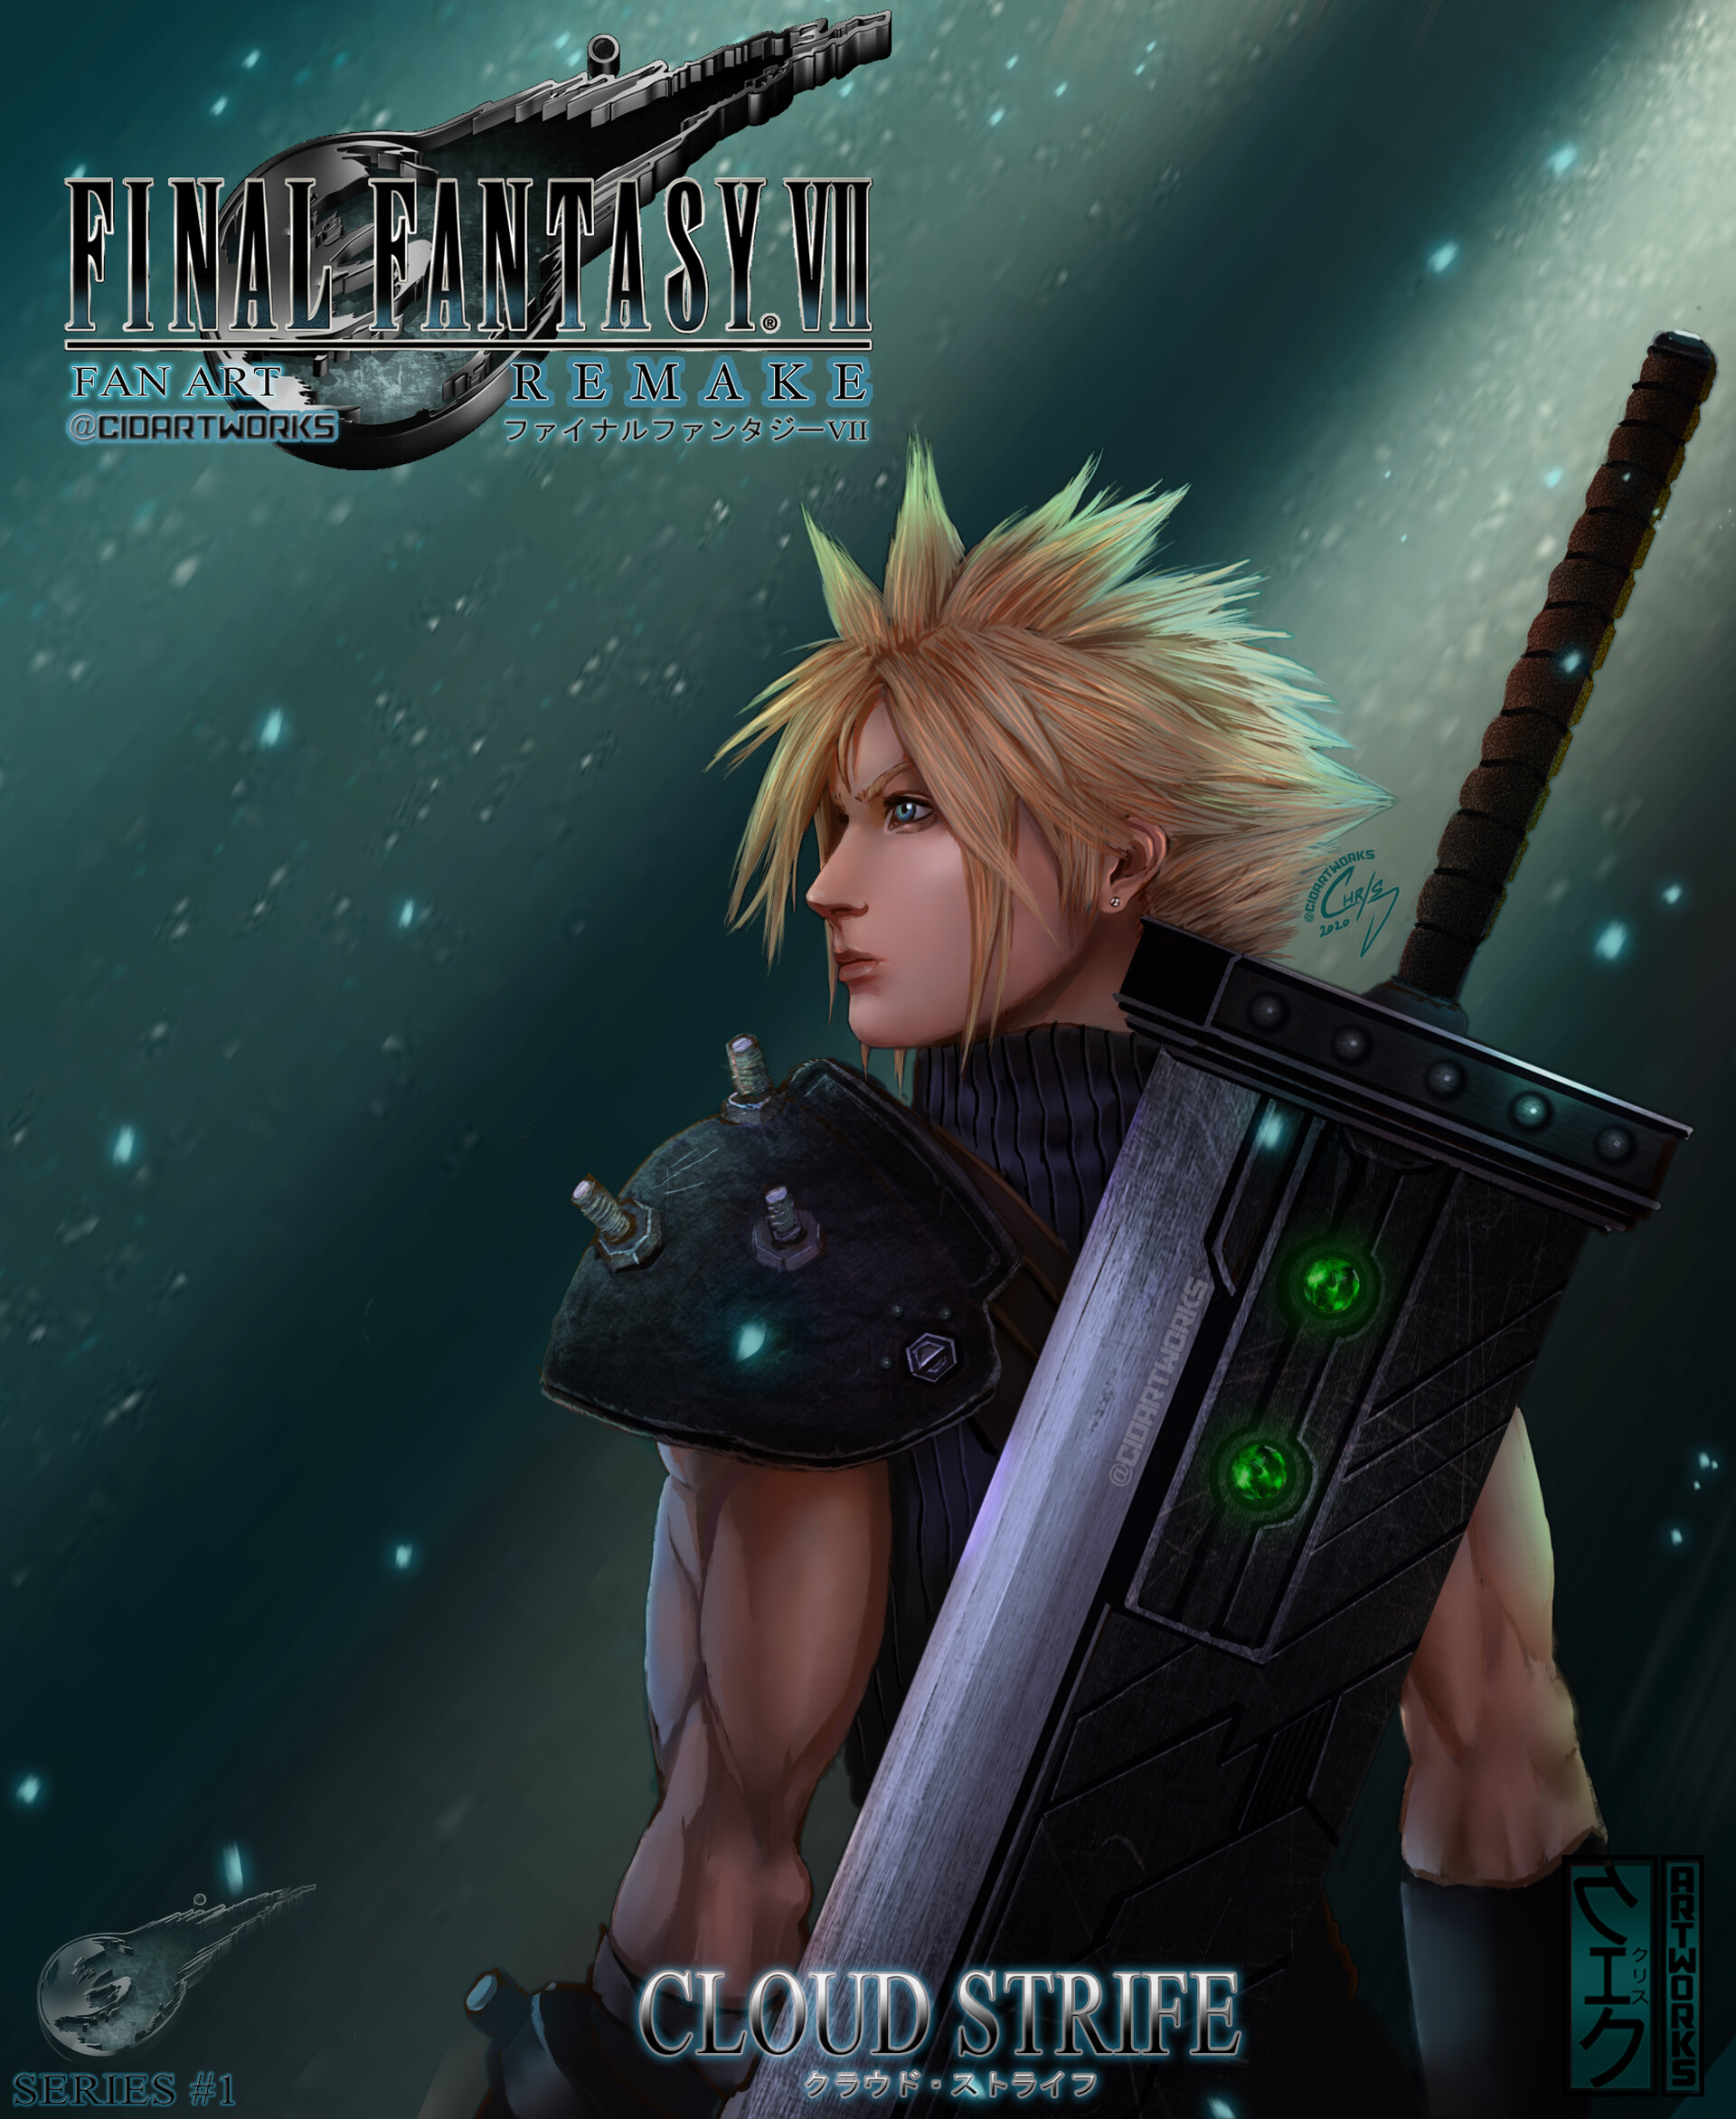 Finally finished my take on Final Fantasy VII Cloud Strife Fan Art Possibly...